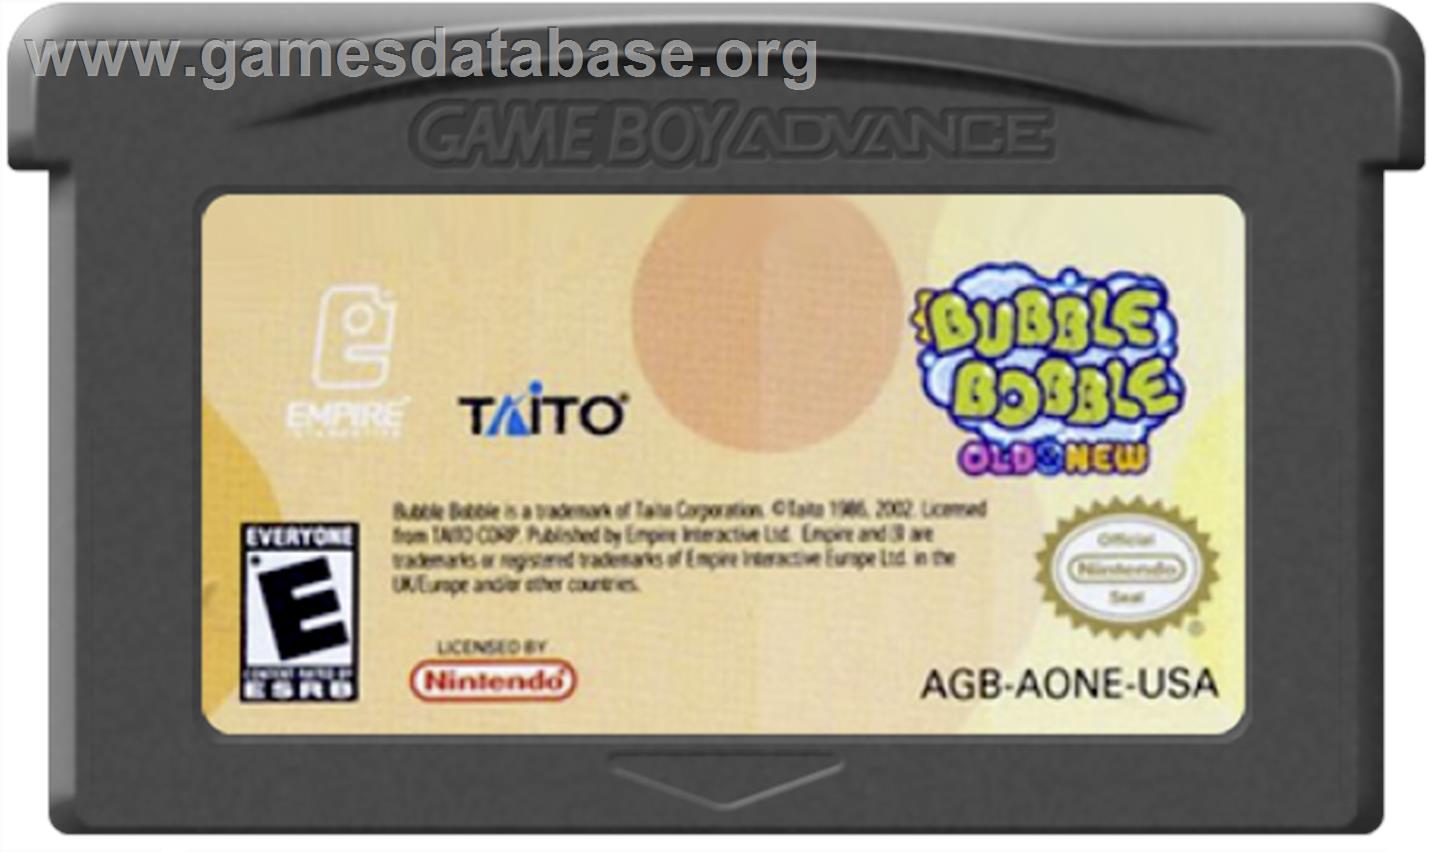 Bubble Bobble Old & New - Nintendo Game Boy Advance - Artwork - Cartridge